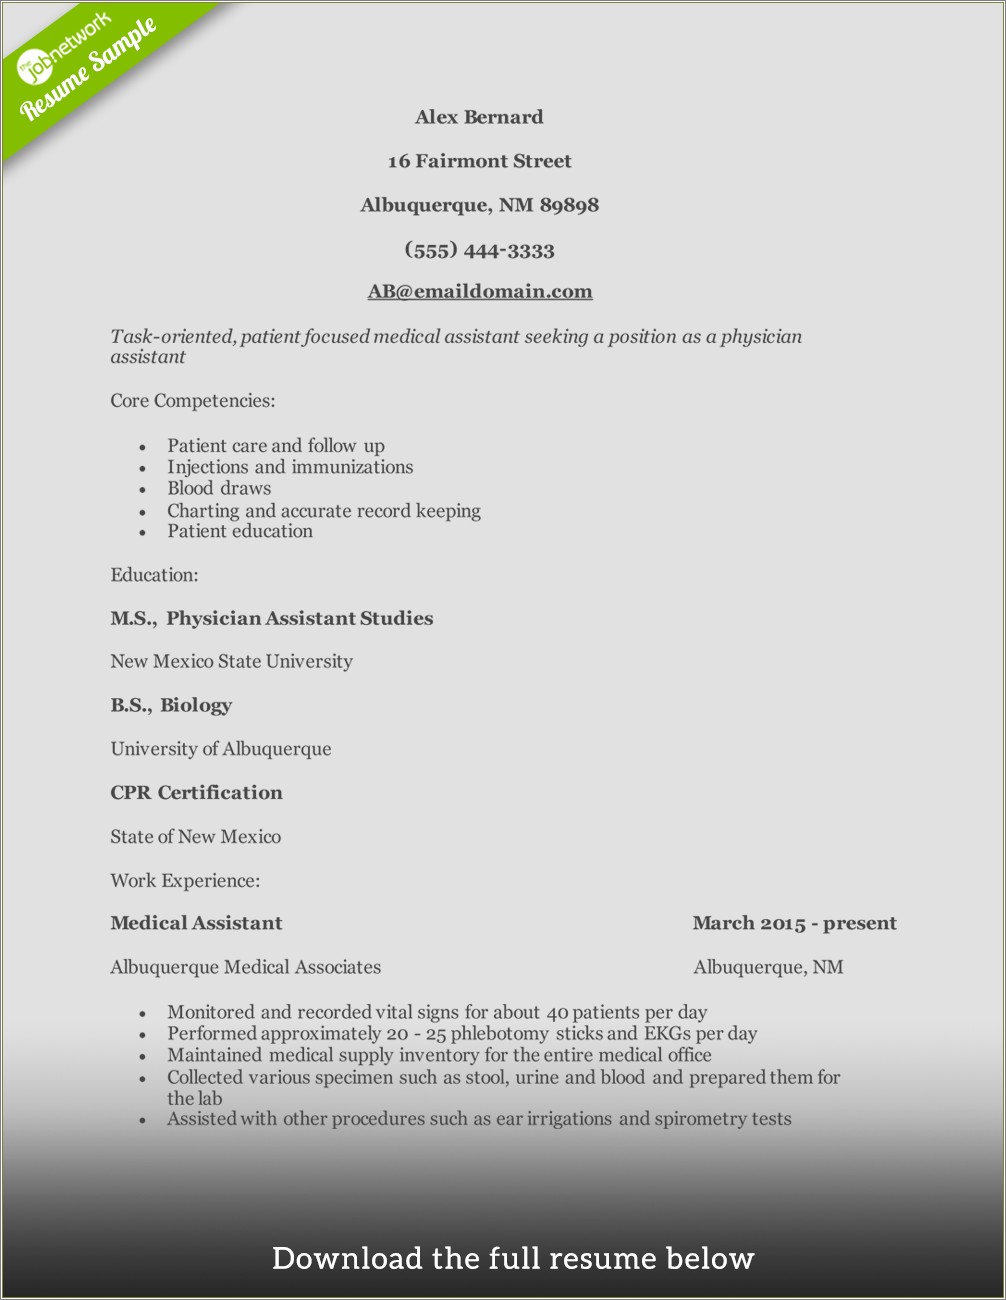 Resume Samples For Medical Assistant Student